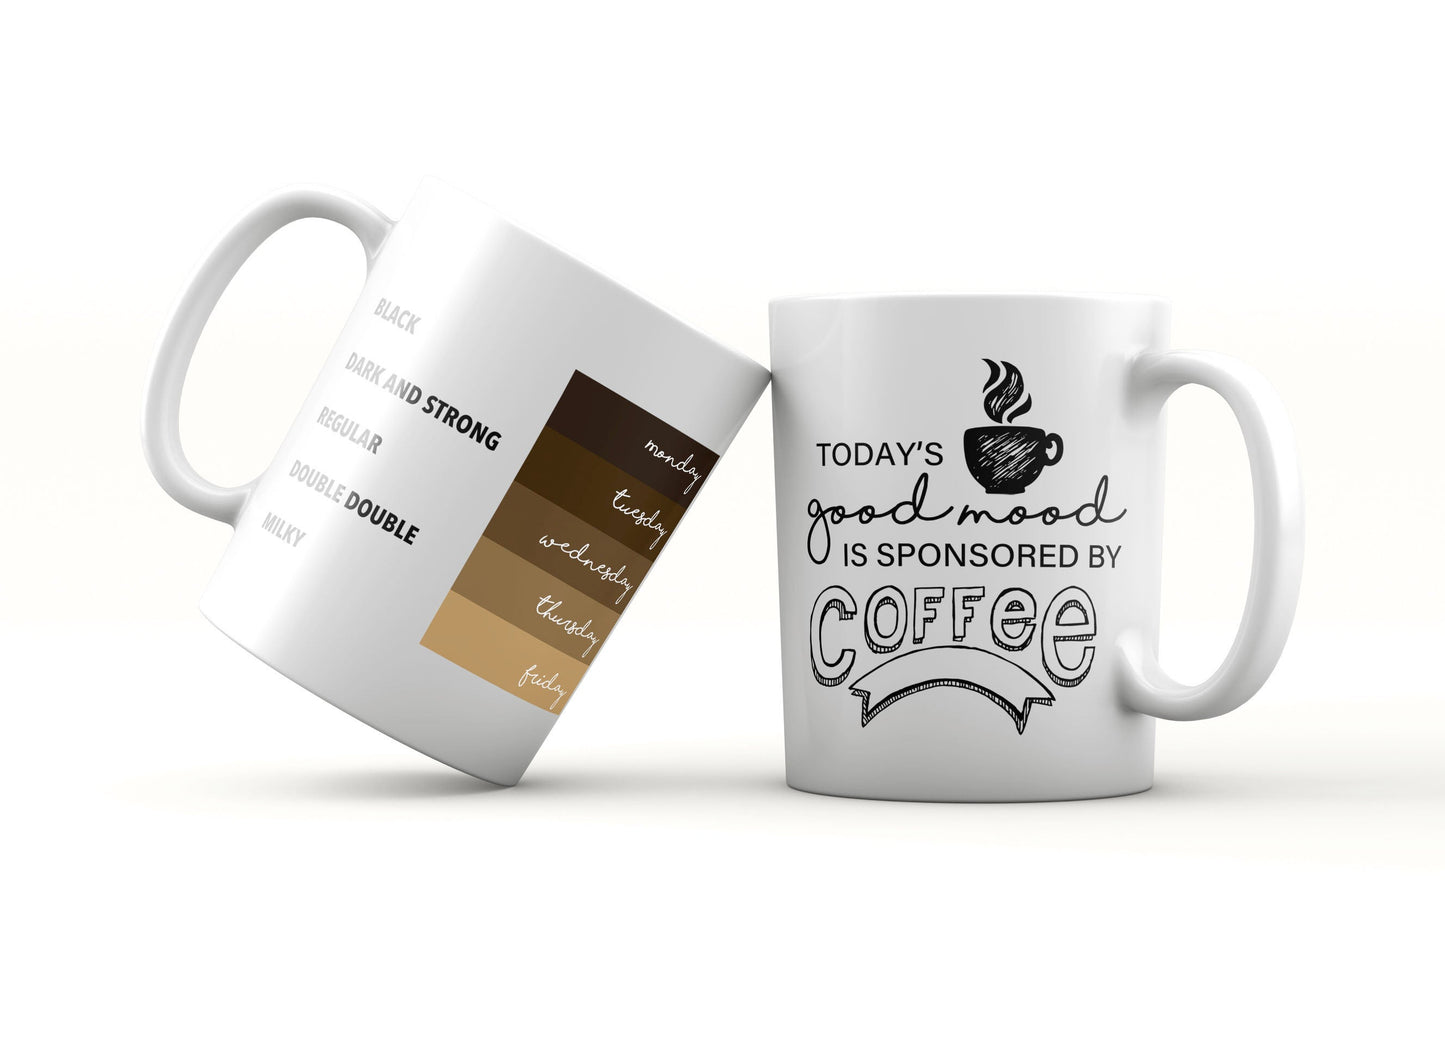 Funny Mug for Dad - Sorry Dad Gift Ideas -Personalized Gifts for Dad Coffee Mug - Dad Gift Birthday Mug